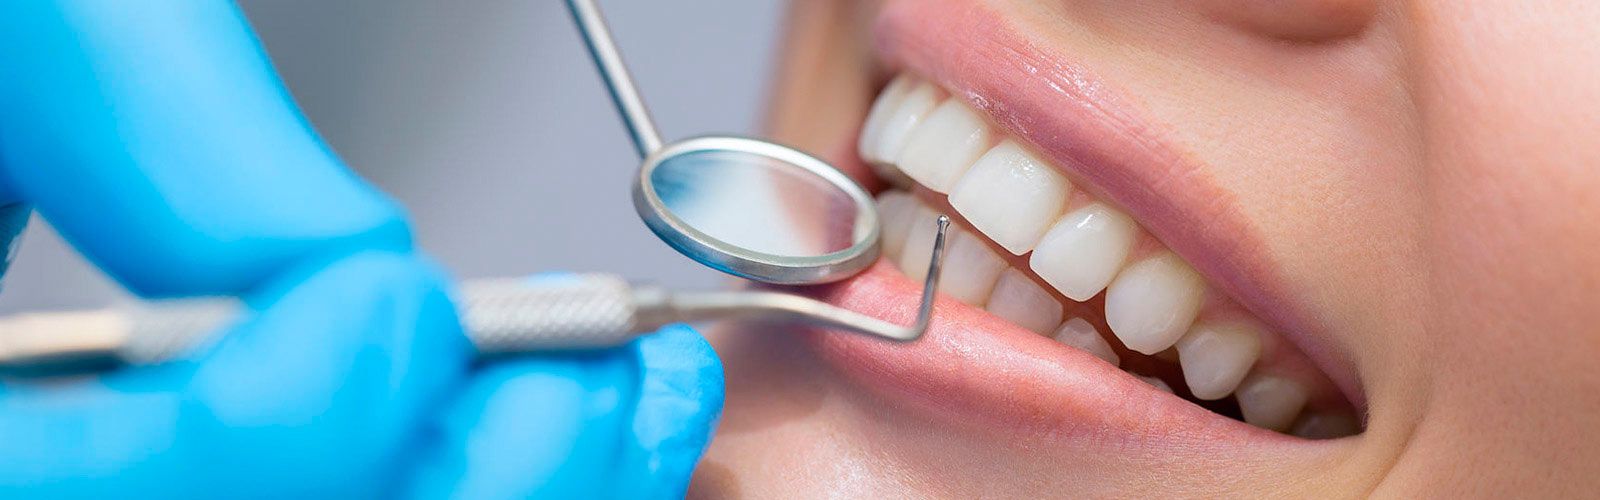 Clínica Dental Valentín Ojeda revisión de dentadura